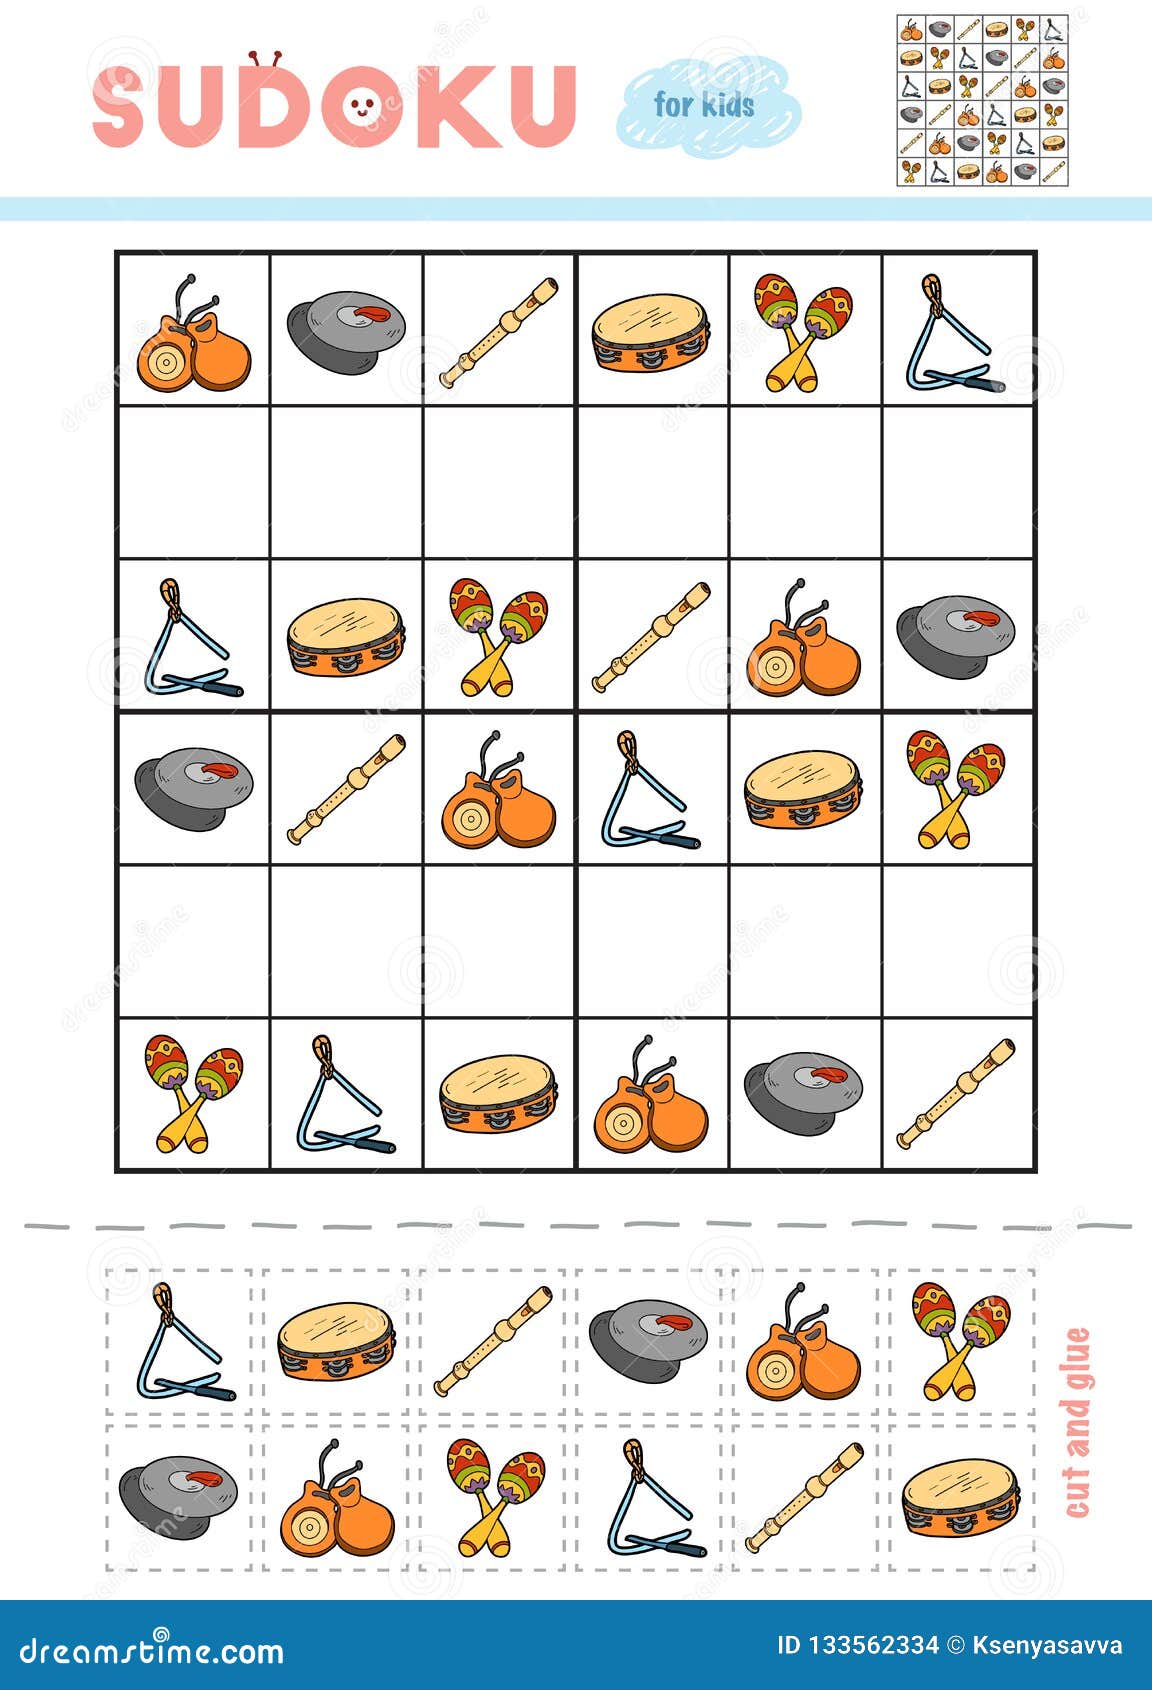 sudoku for children, education game. set of musical intstruments